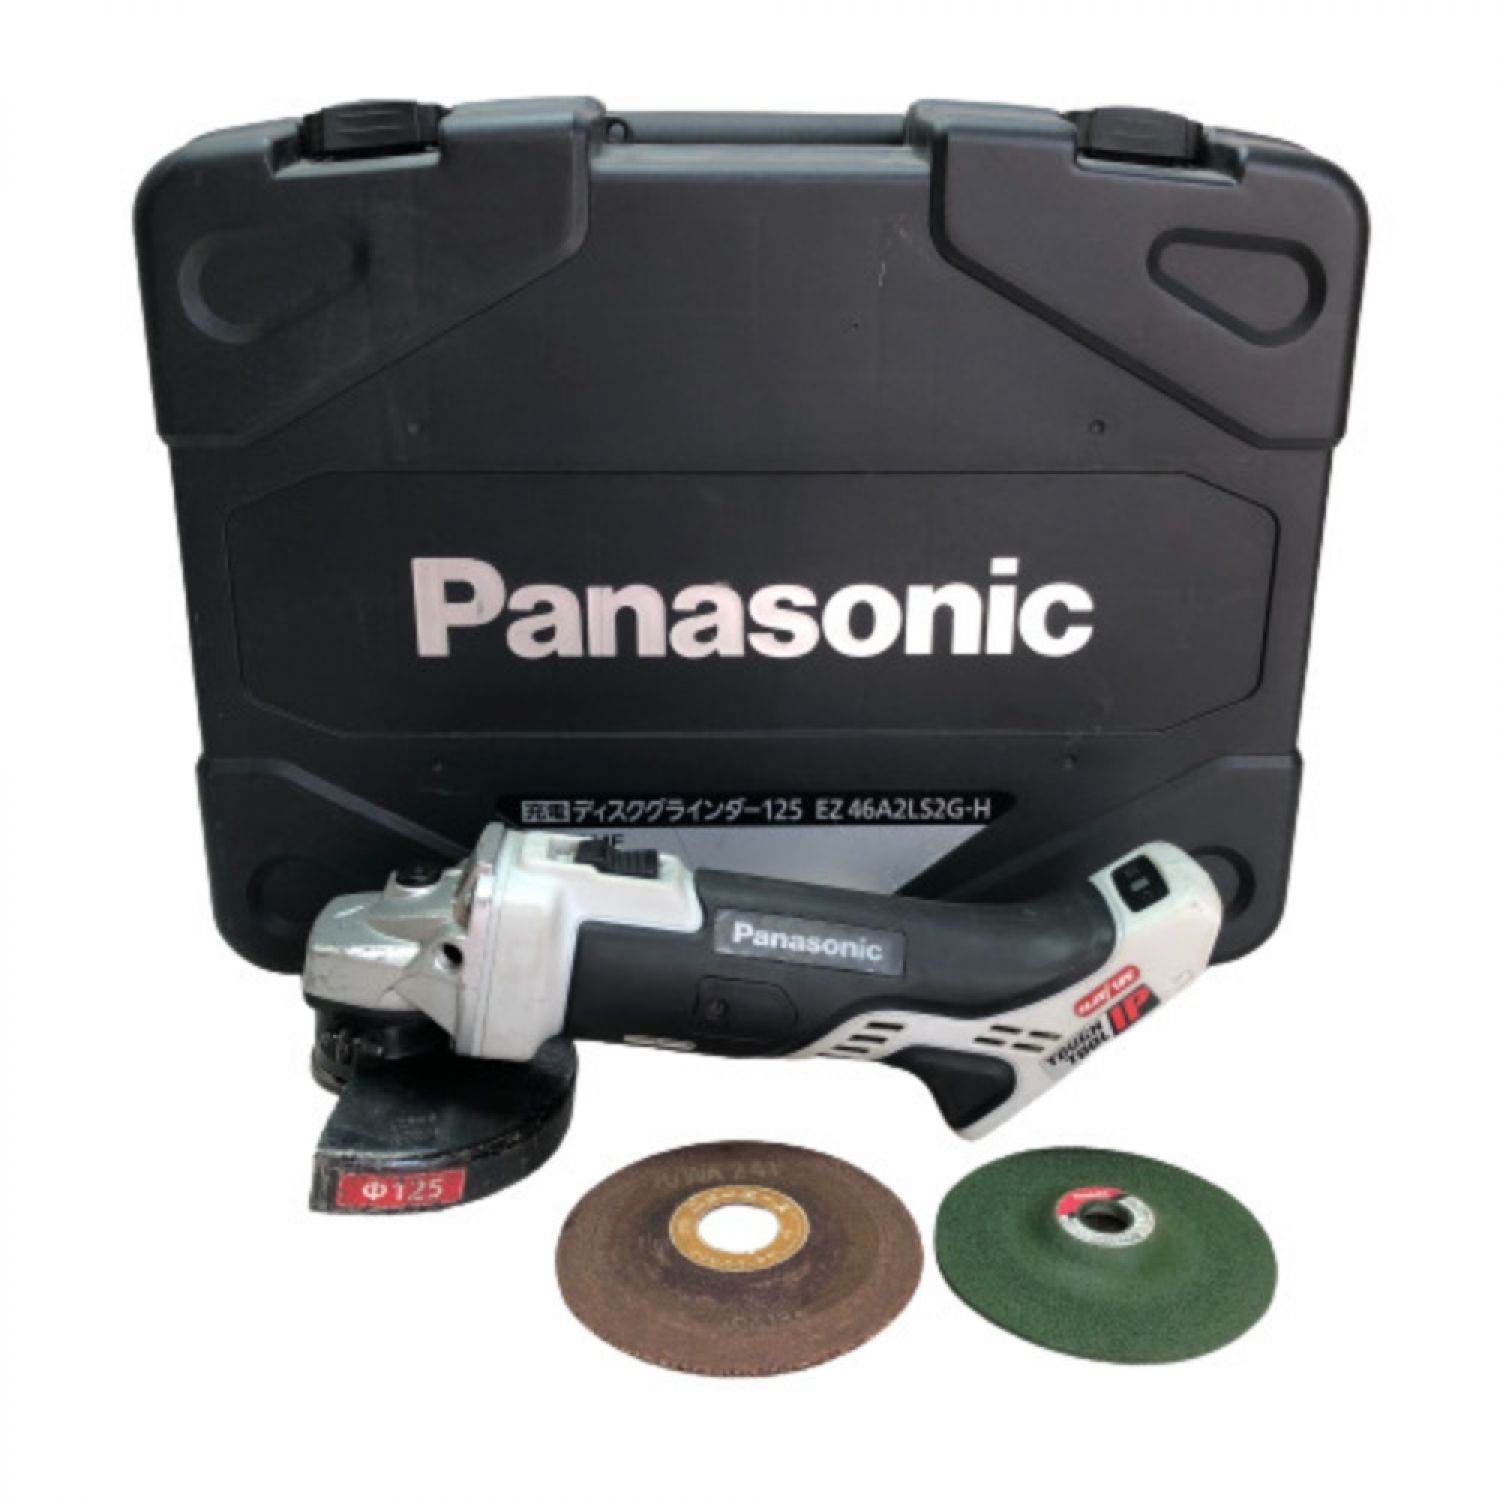 IK 新品Panasonic EZ46A2LJ2G-H 充電ディスクグラインダー-